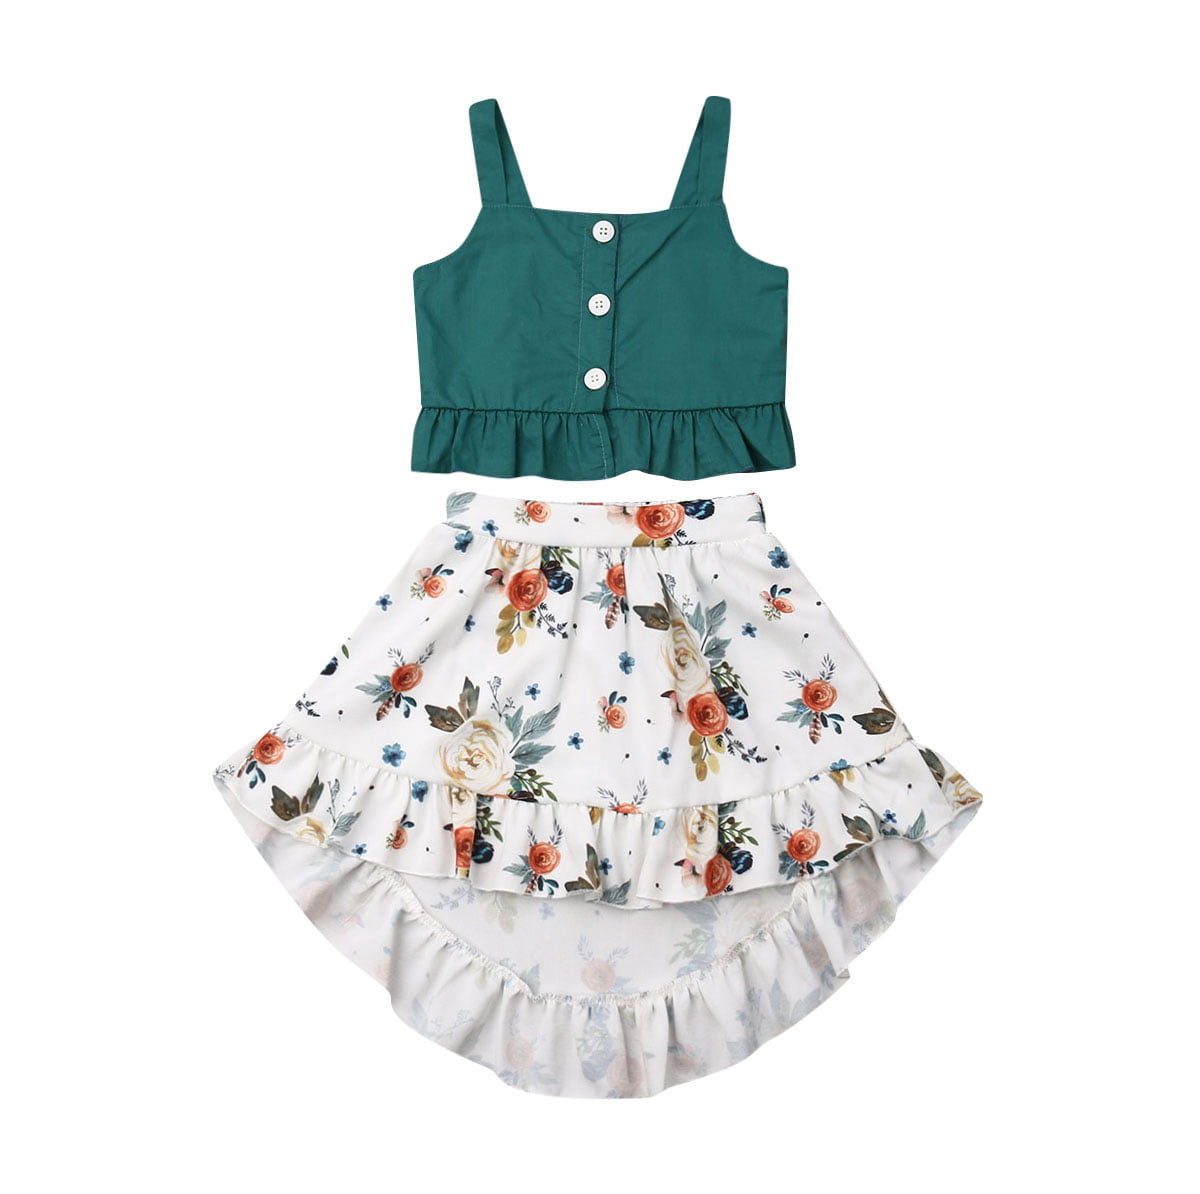 Toddler Kids Baby Girls Outfits Clothes T-shirt Tops+Tutu Dress Skirt 2PCS Sets 